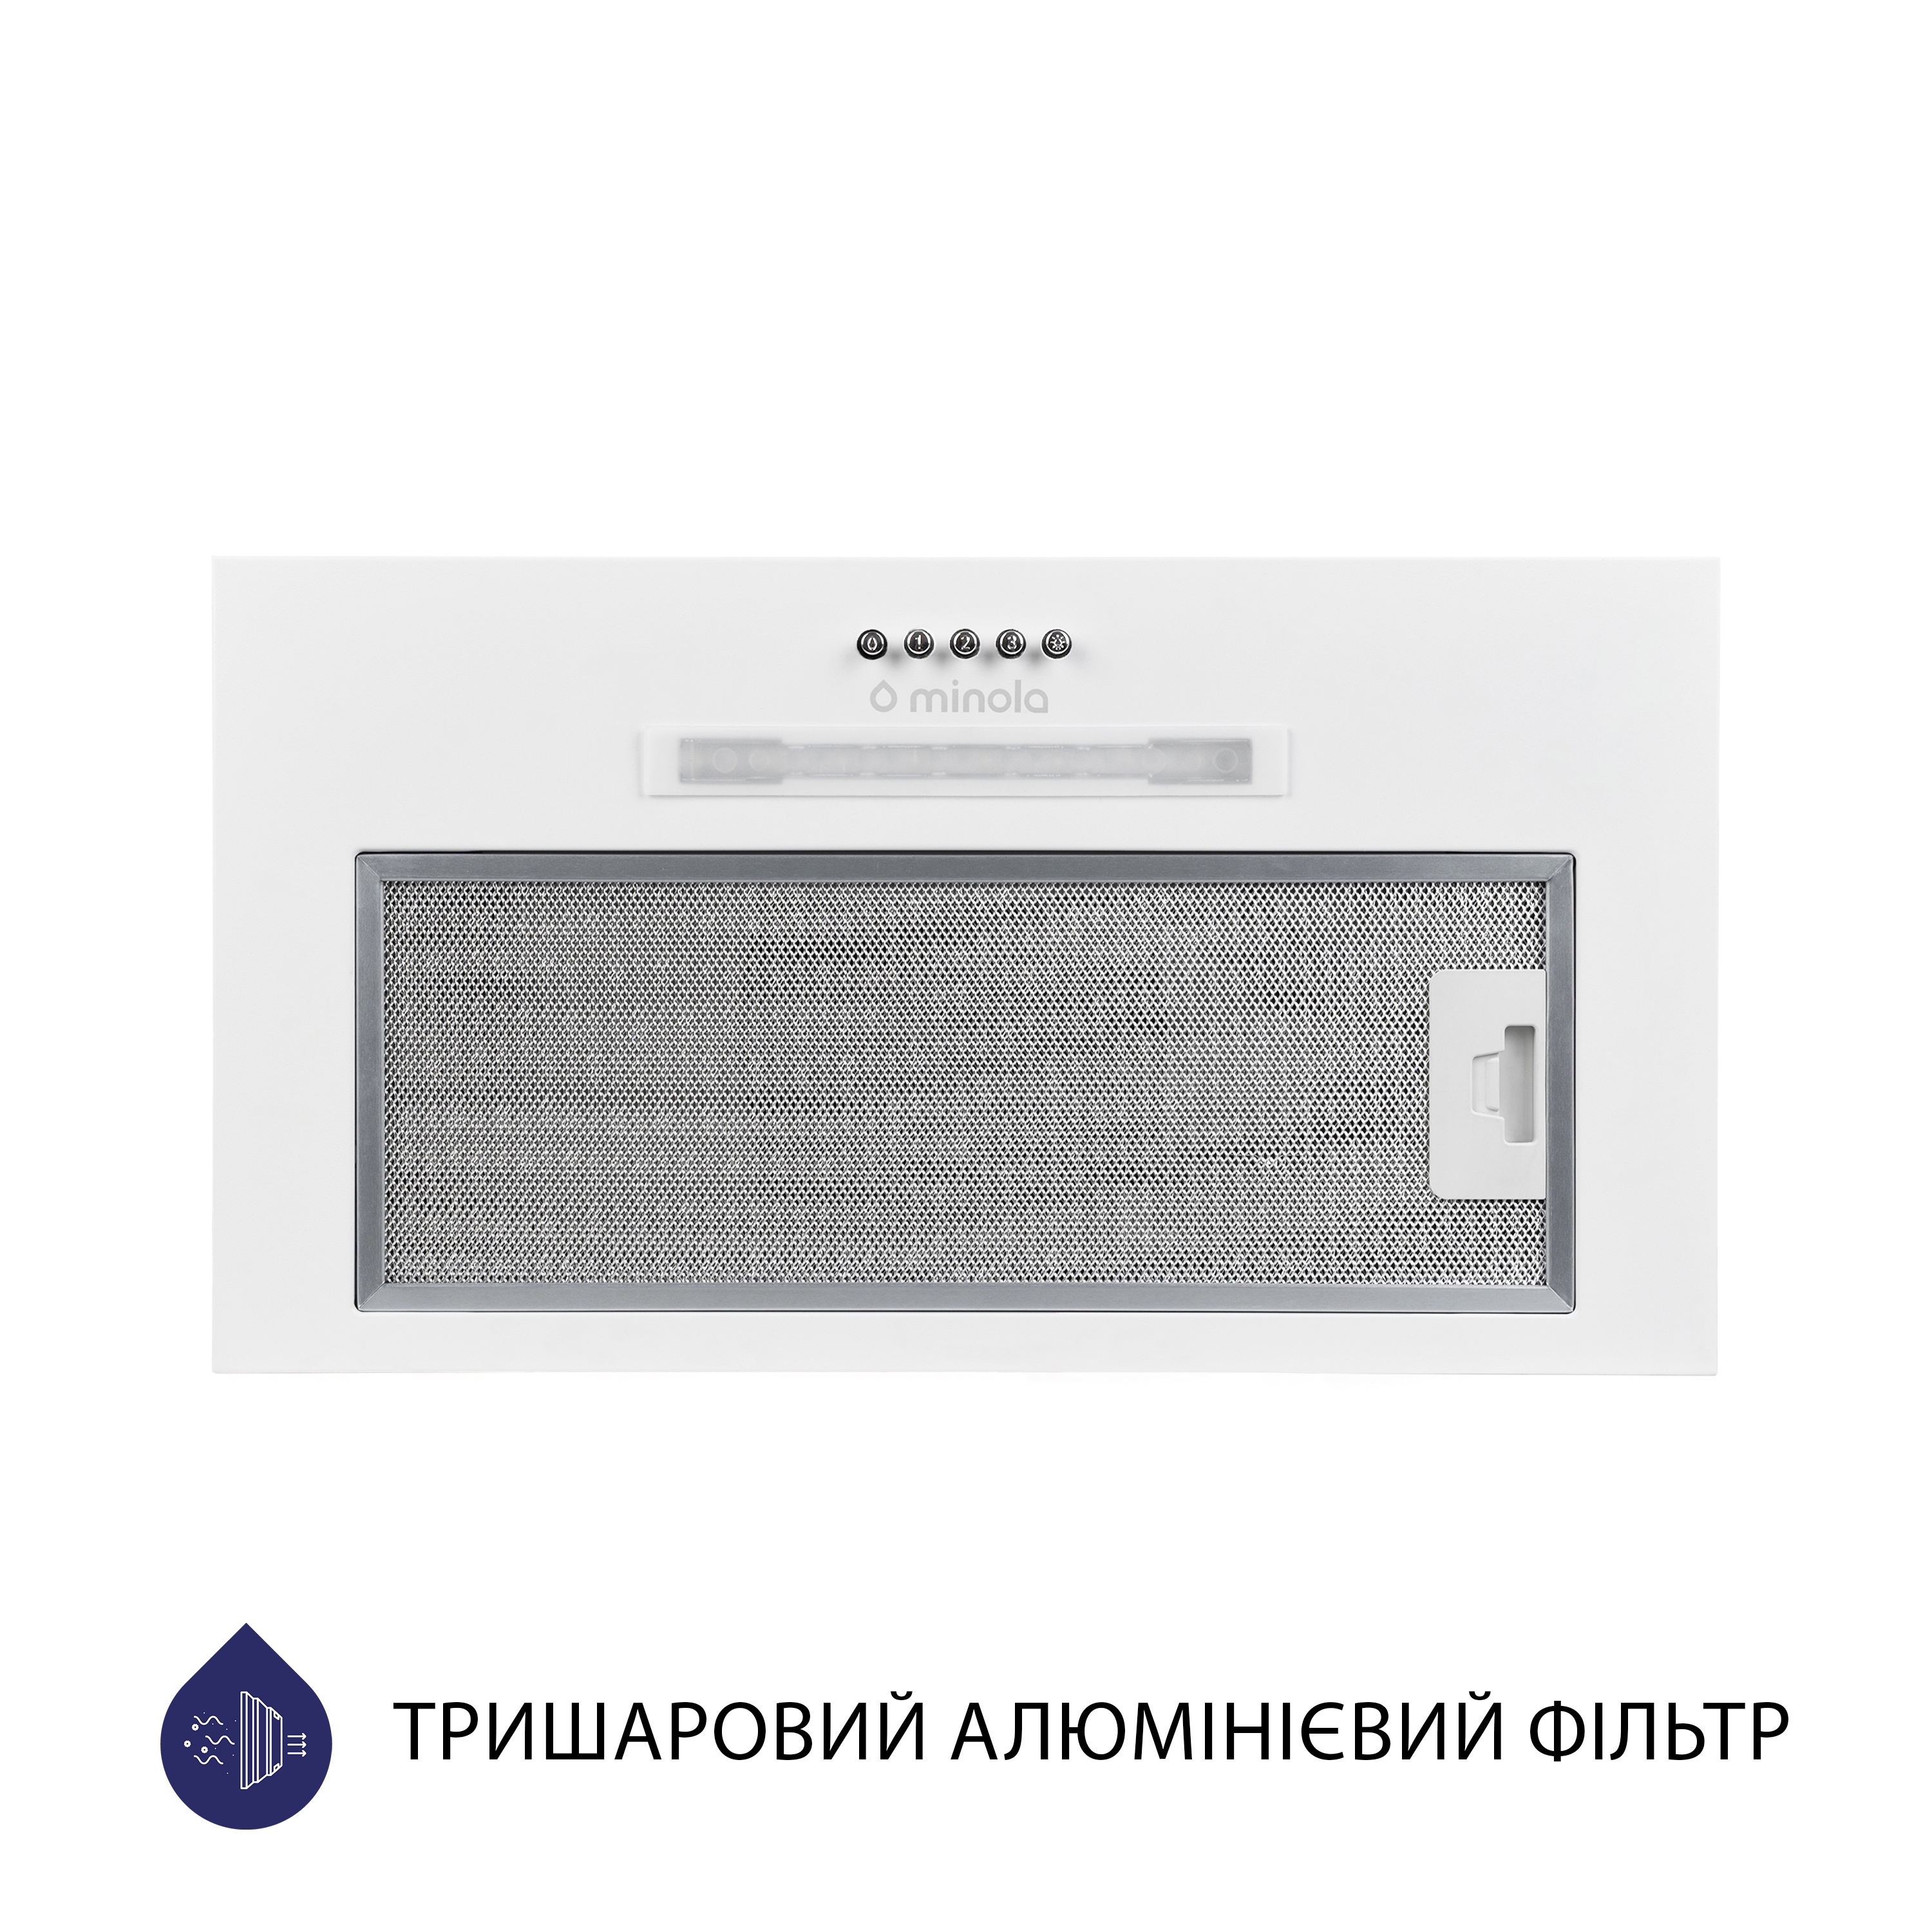 Витяжка кухонная полновстраиваемая Minola HBI 5323 WH 800 LED цена 3419 грн - фотография 2